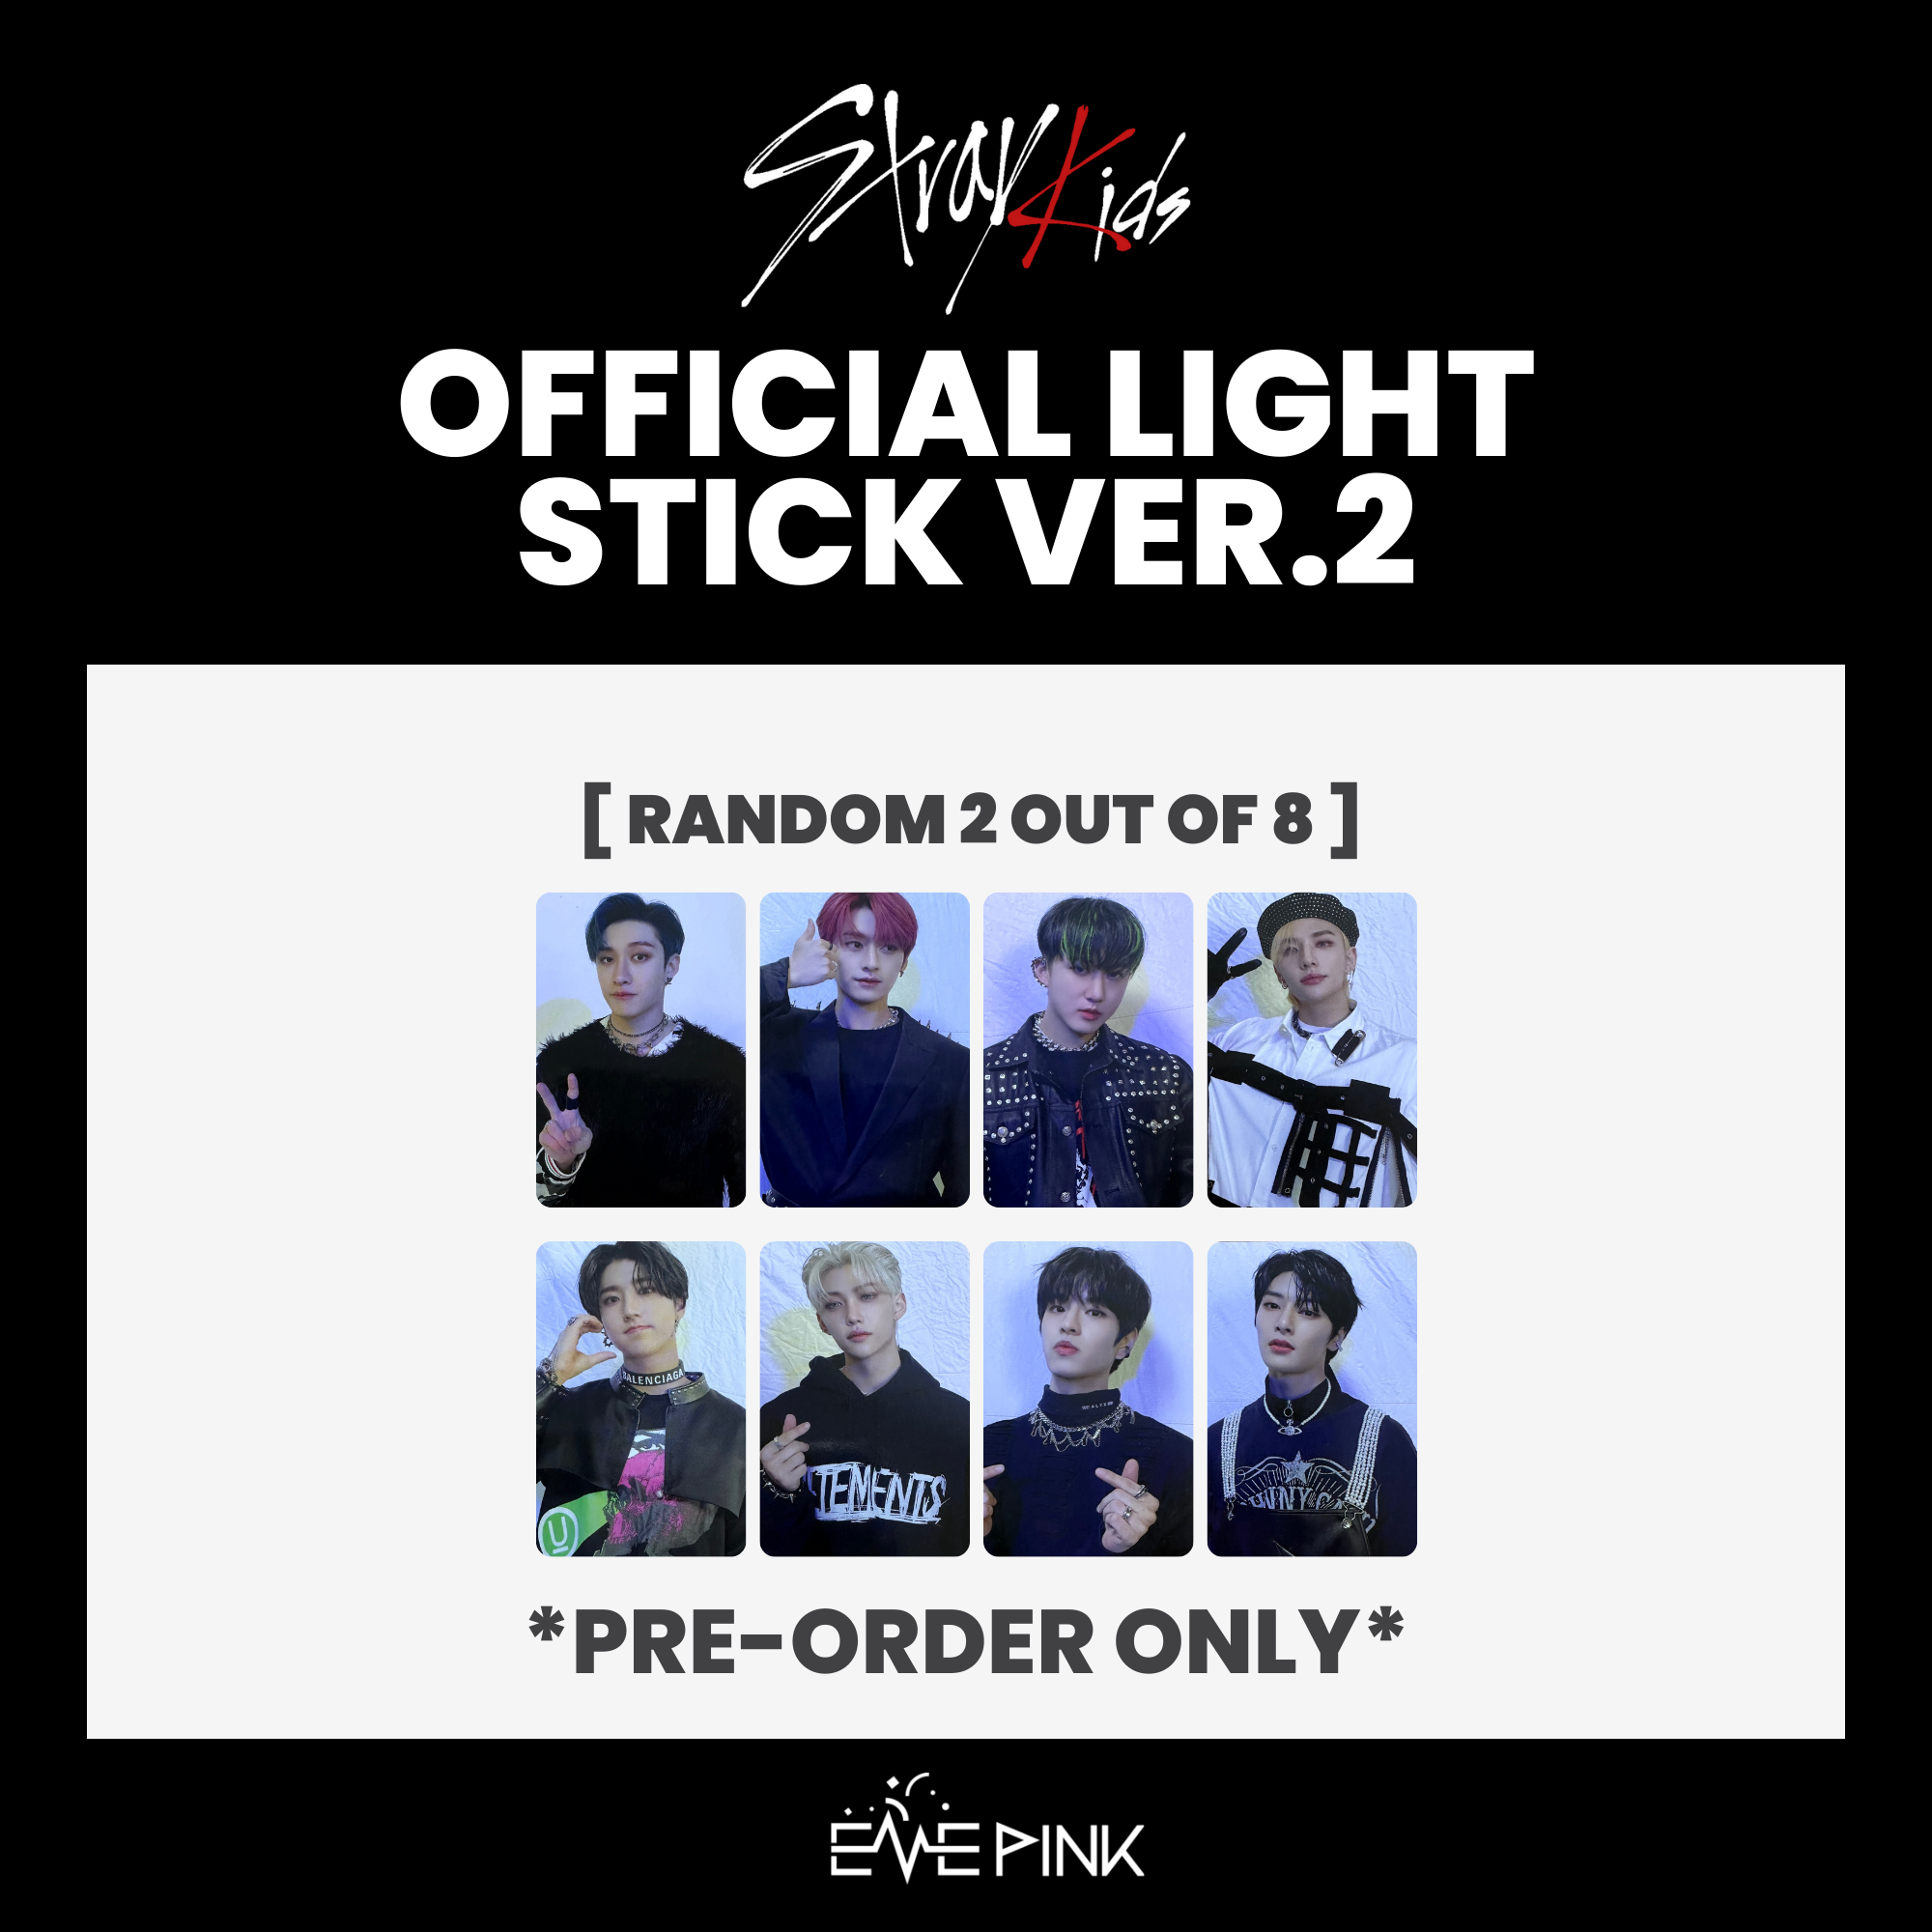 Stray Kids - Official Light Stick Ver. 2